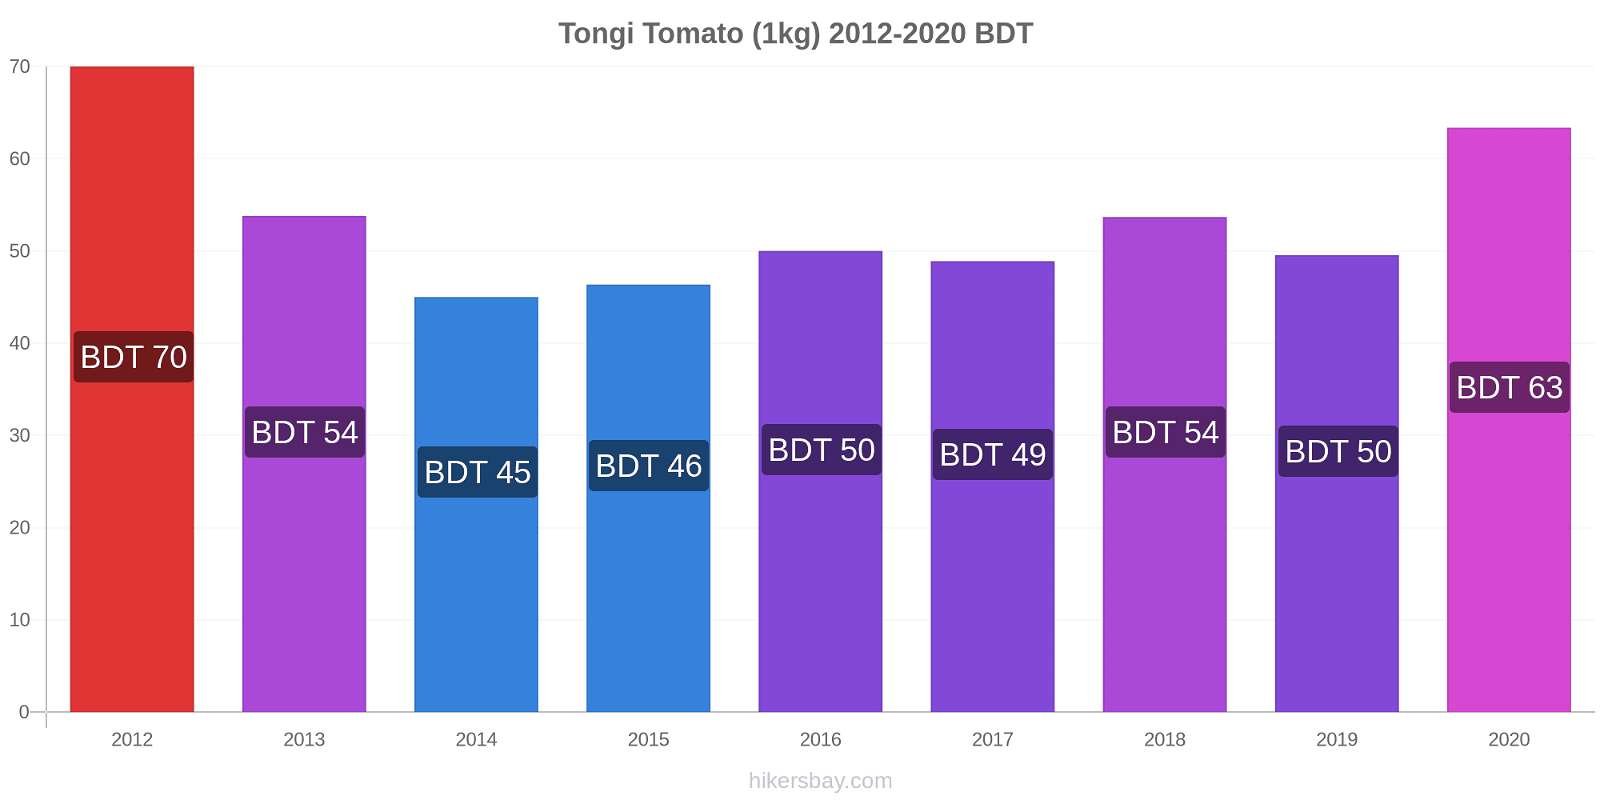 Tongi price changes Tomato (1kg) hikersbay.com